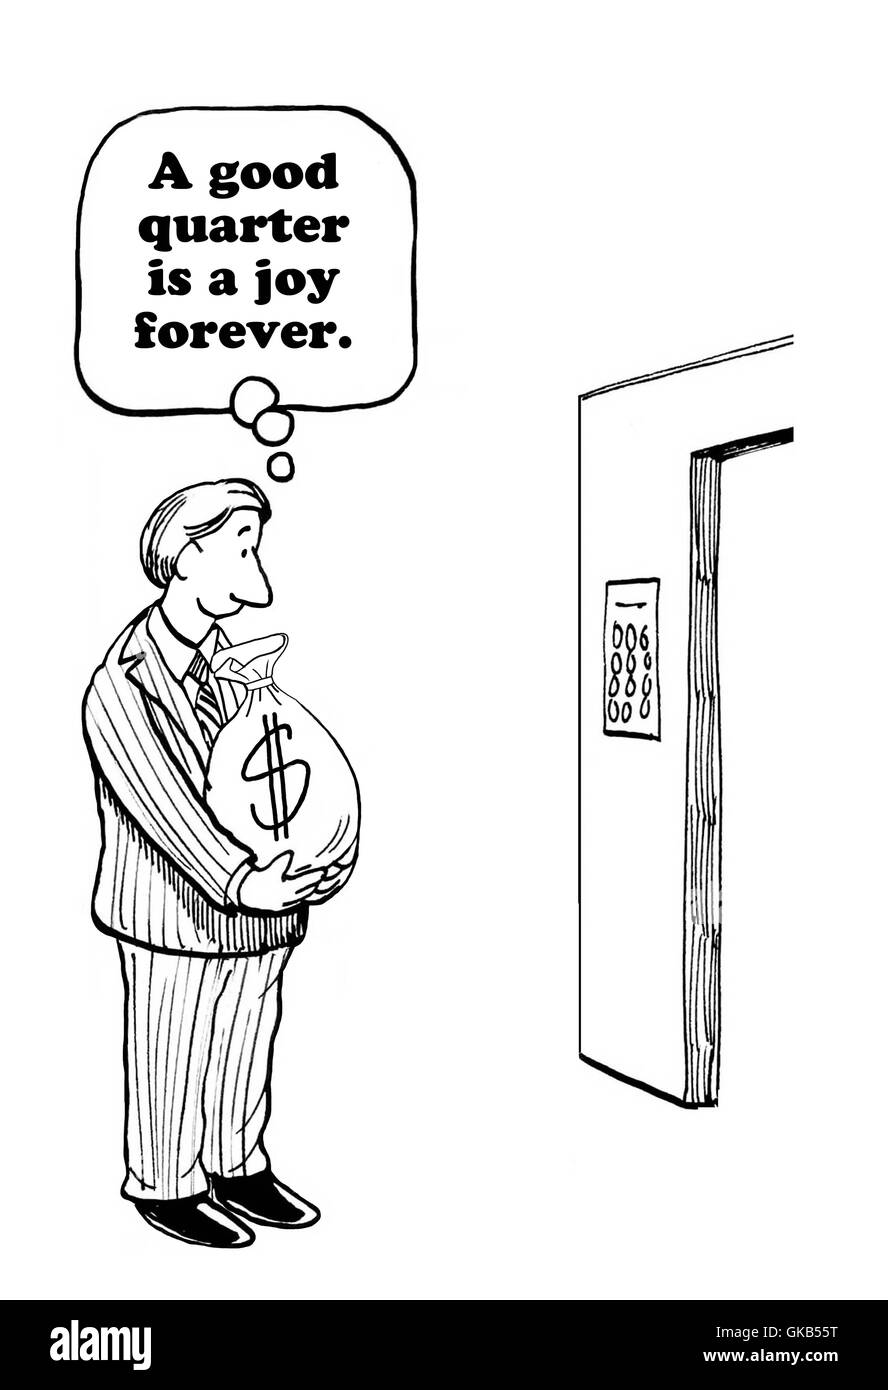 Business cartoon about an excellent financial quarter. Stock Photo